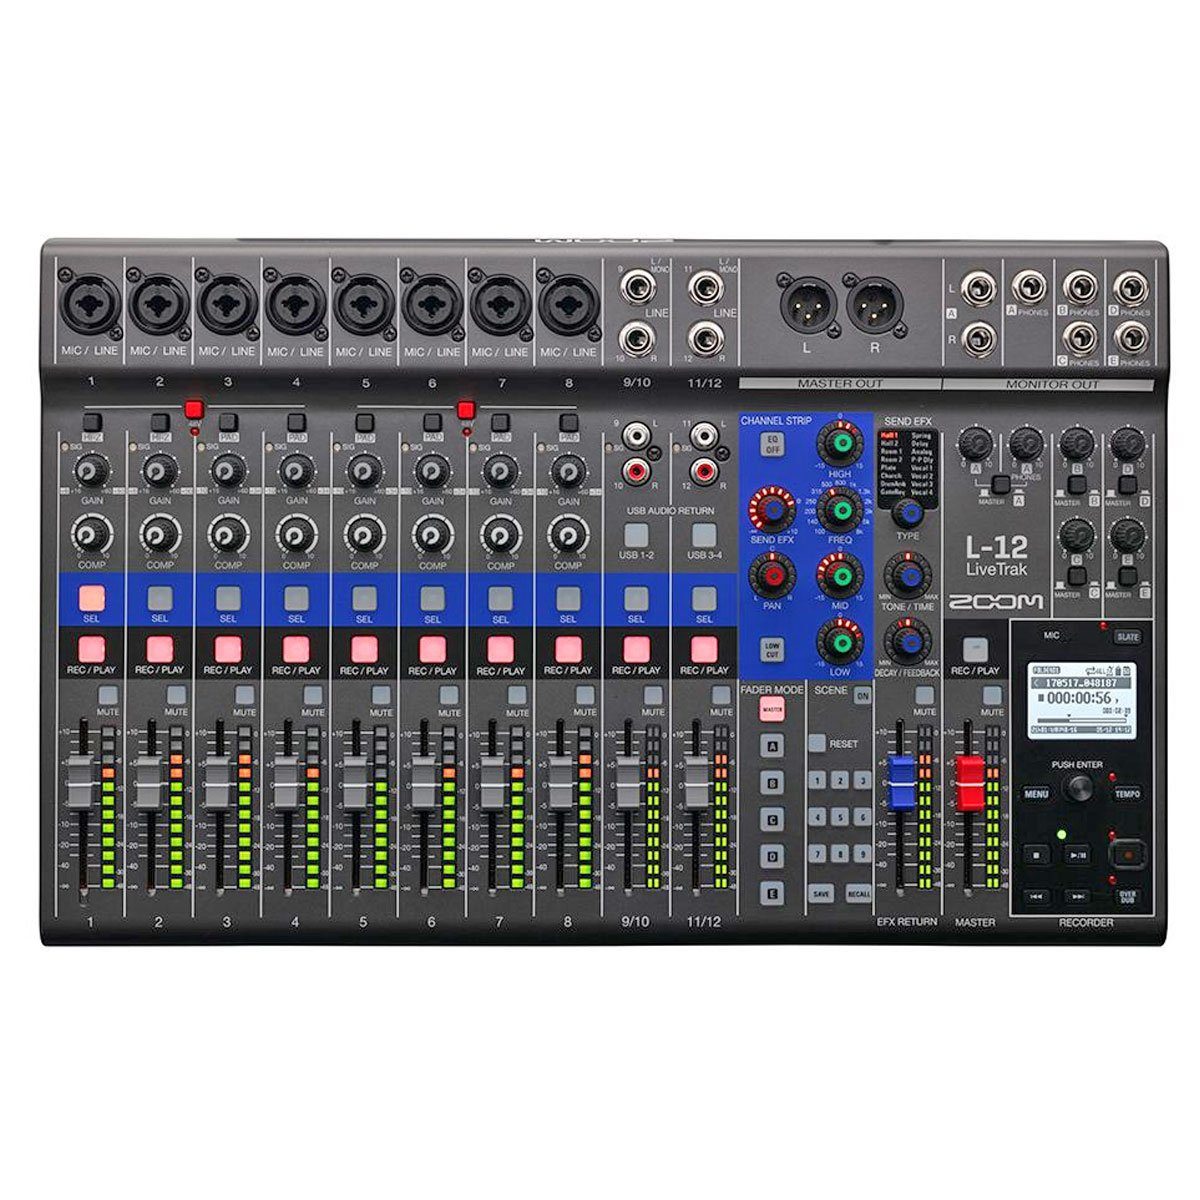 Zoom Audio Mischpult L-12 LiveTrak, (Digitaler Mixer, 12 Kanäle), mit USB-Interface Funktion